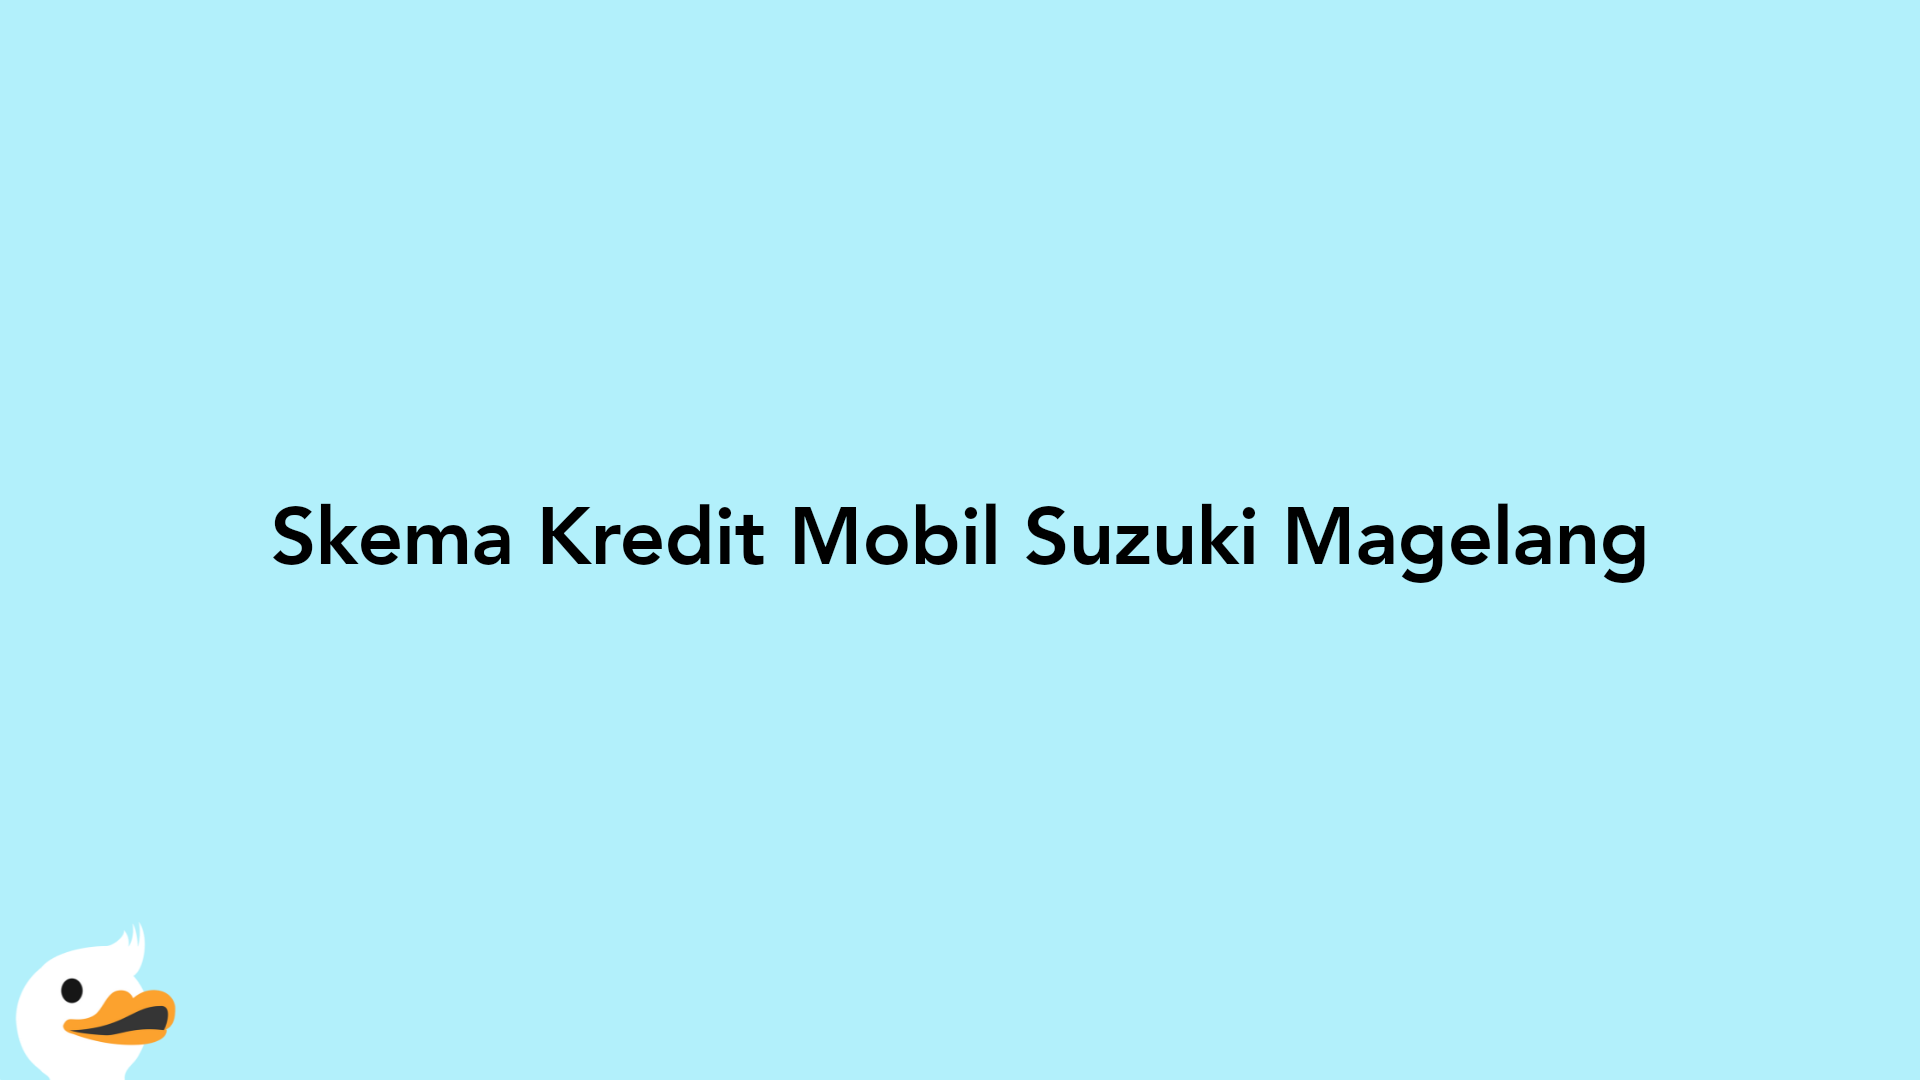 Skema Kredit Mobil Suzuki Magelang